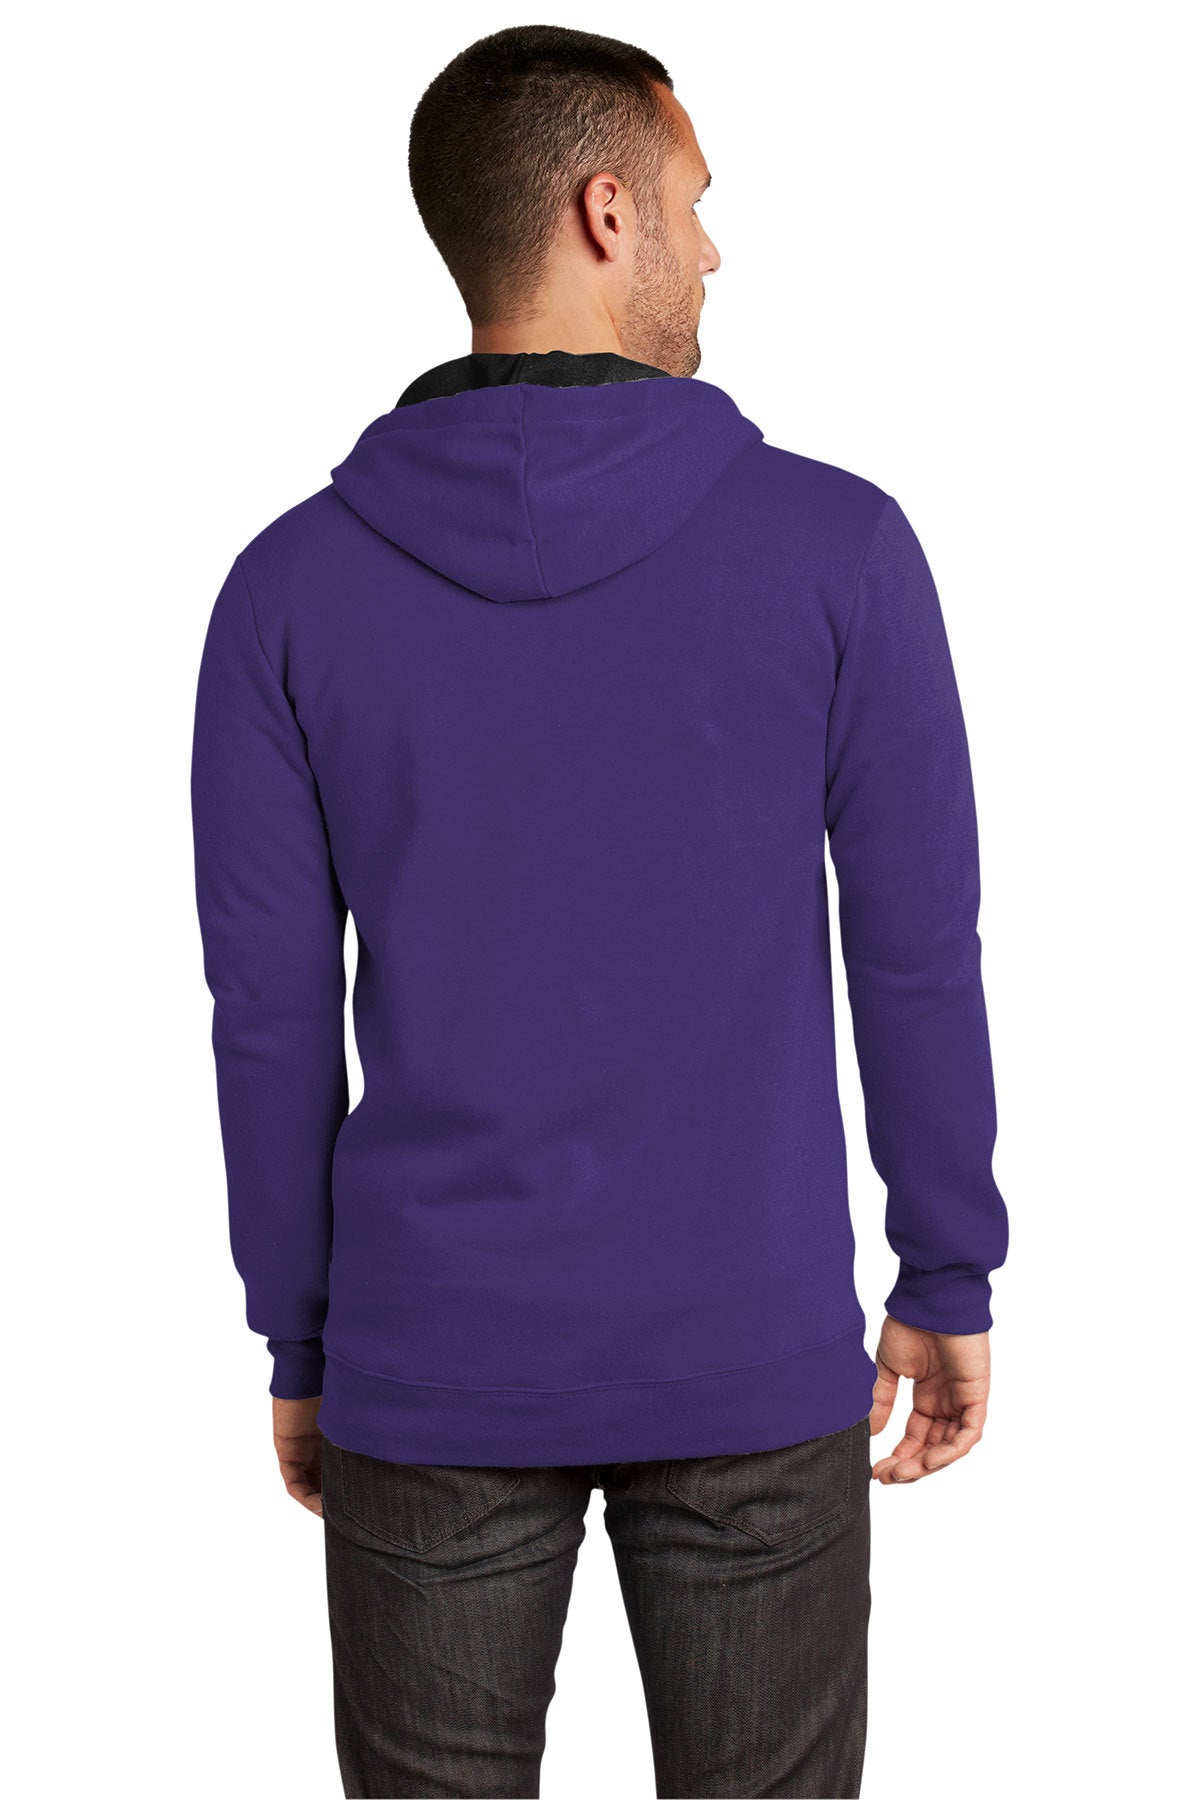 district_dt800 _purple_company_logo_sweatshirts